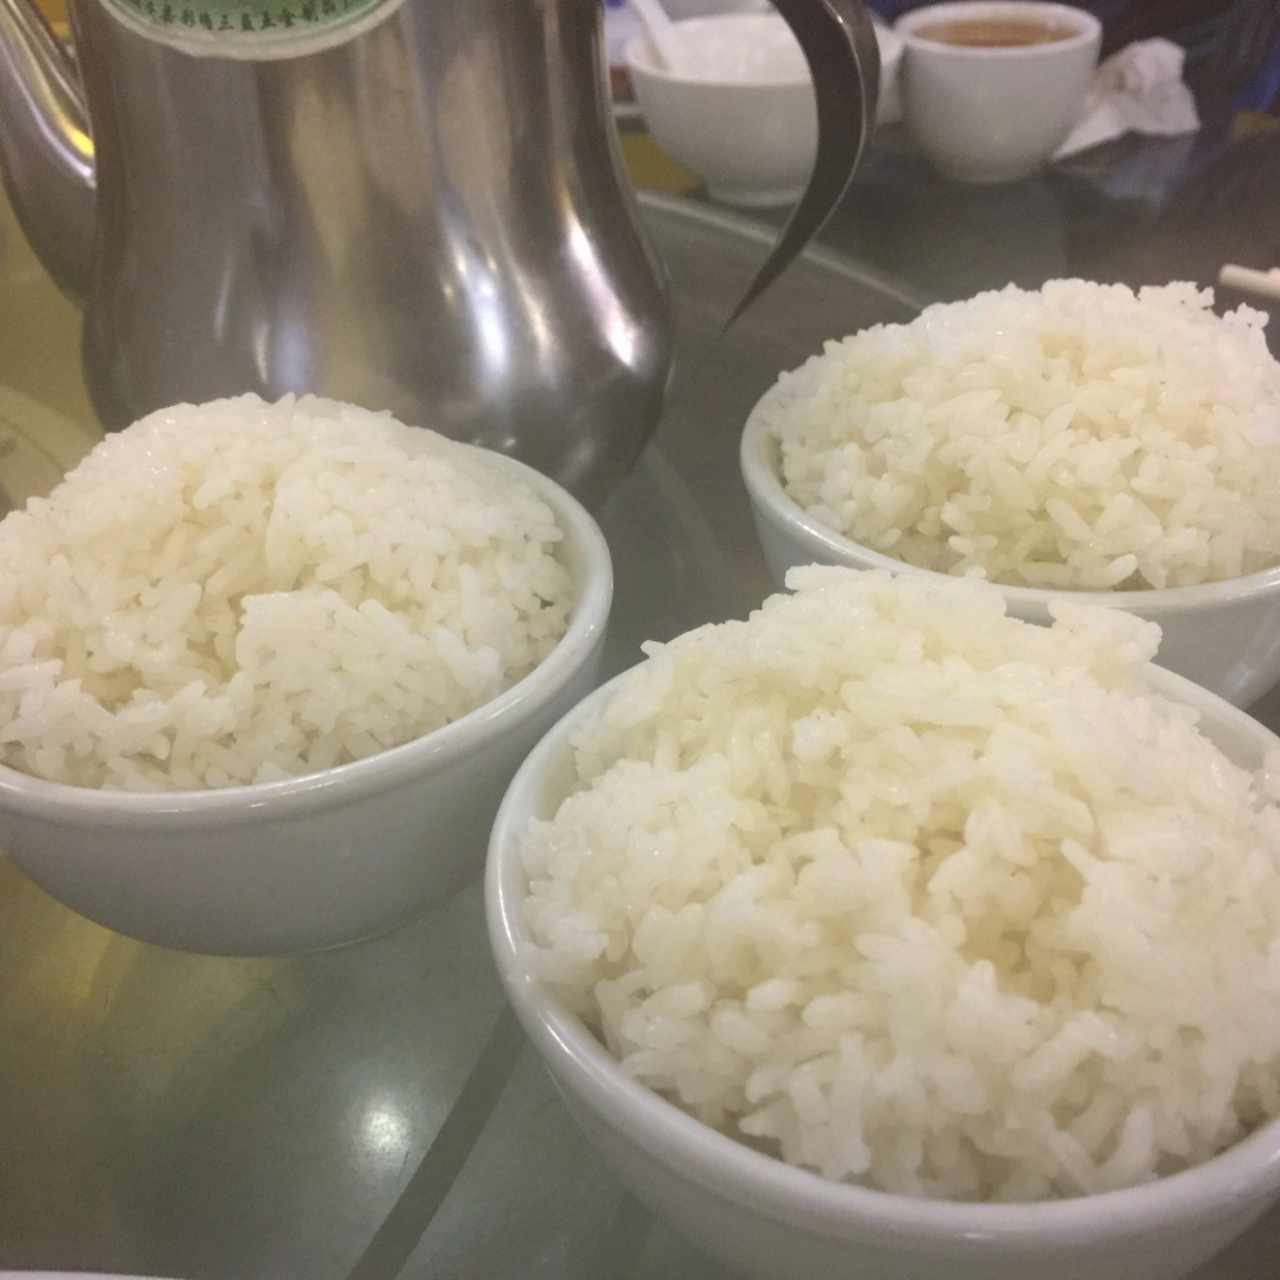 jaszmin white rice